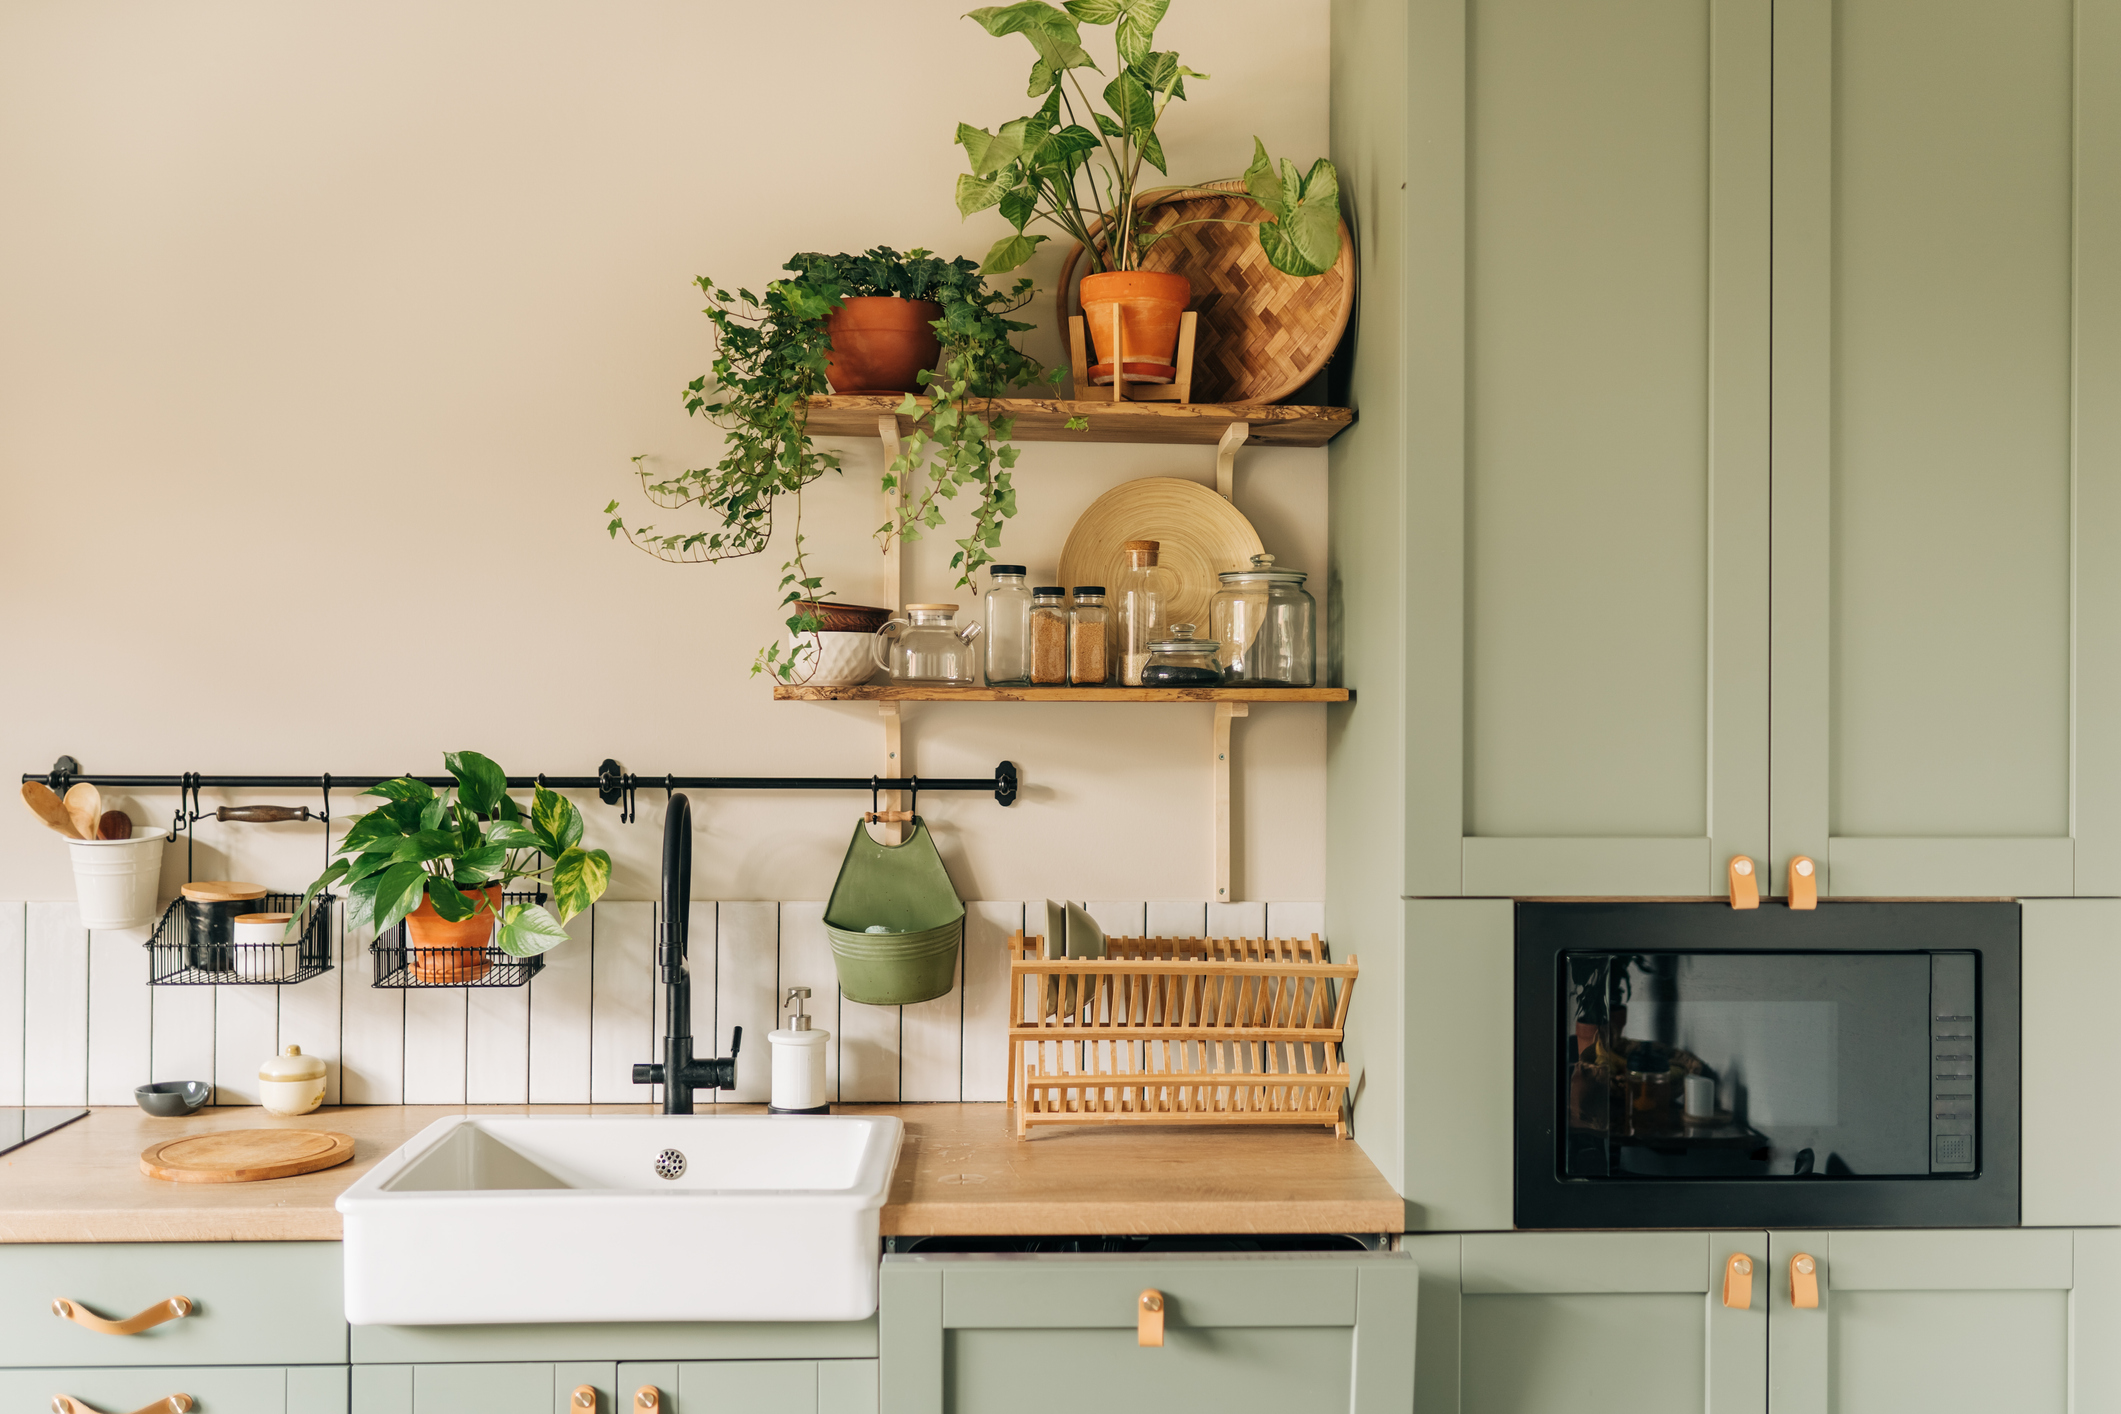 Green Kitchens - 29 Inspiring Green Kitchen Ideas